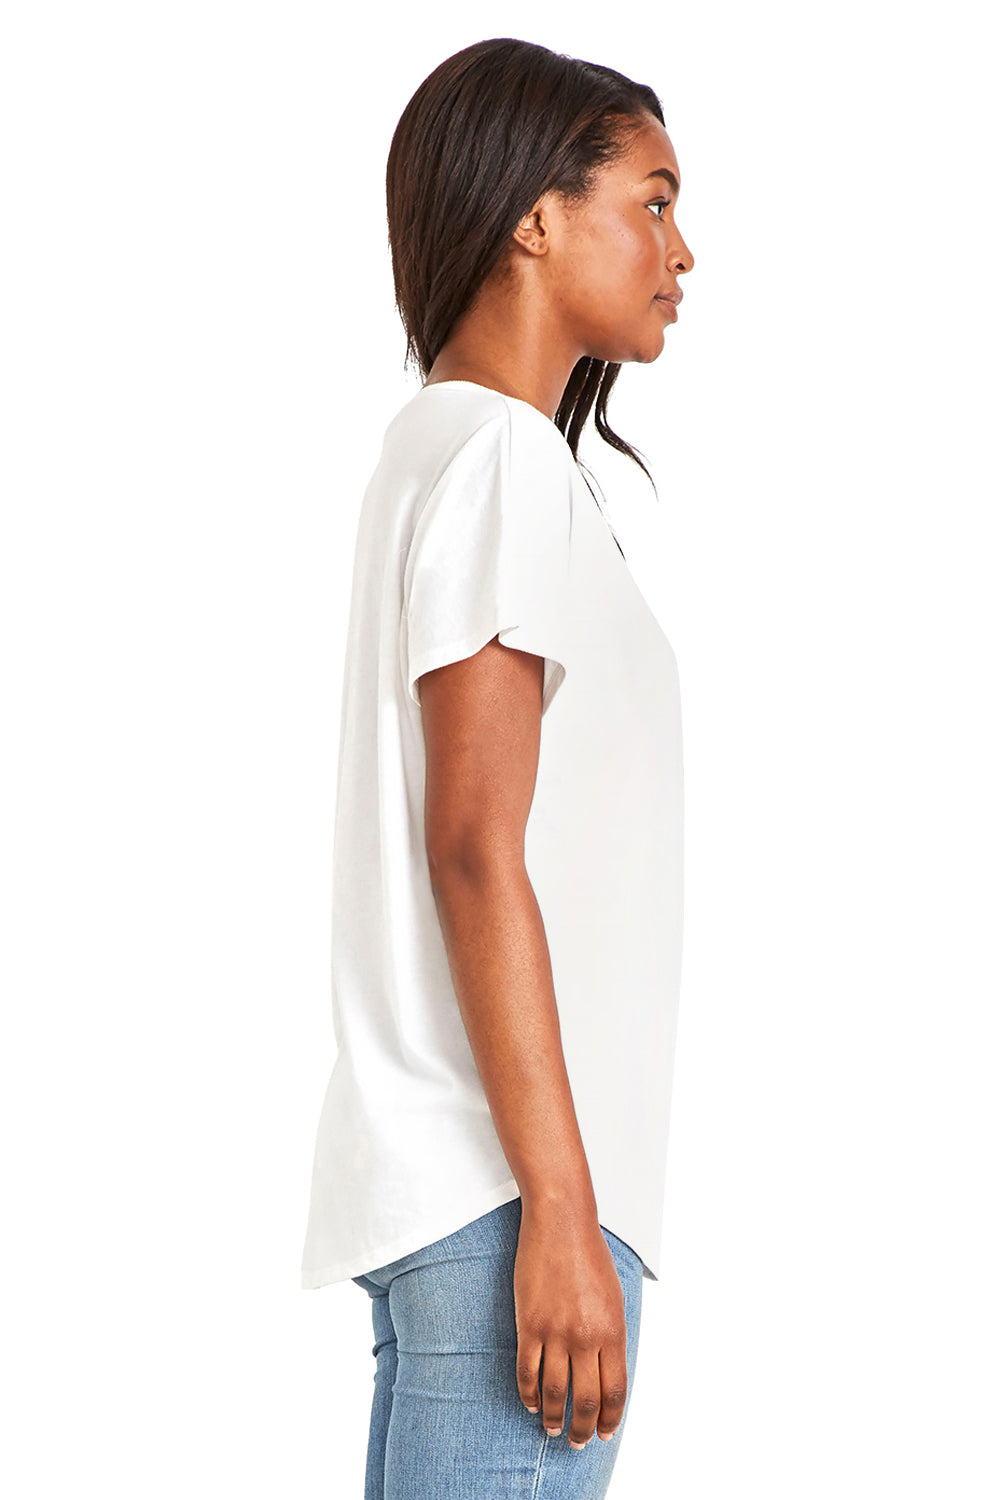 Next Level 1560 Womens Ideal Dolman Short Sleeve Crewneck T-Shirt White Side